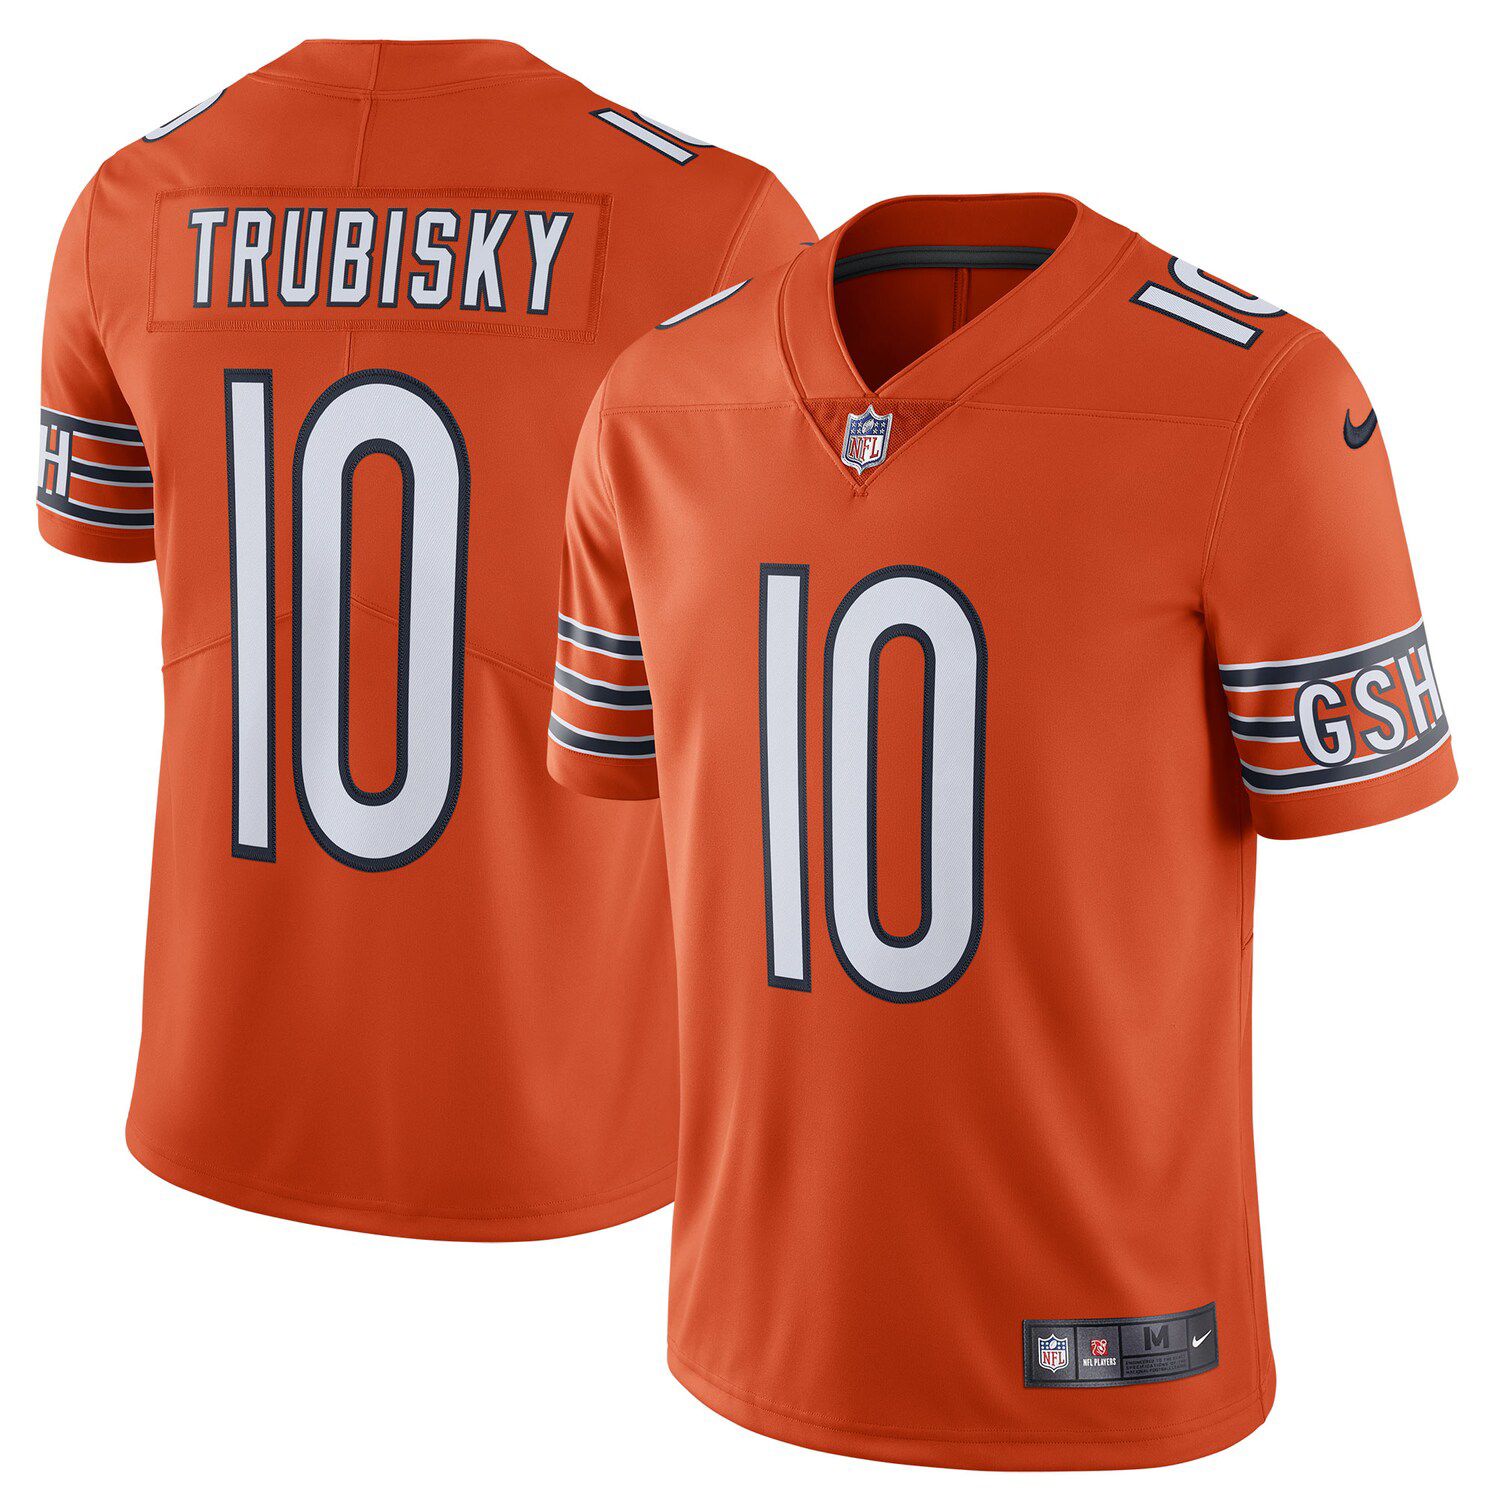 trubisky stitched jersey